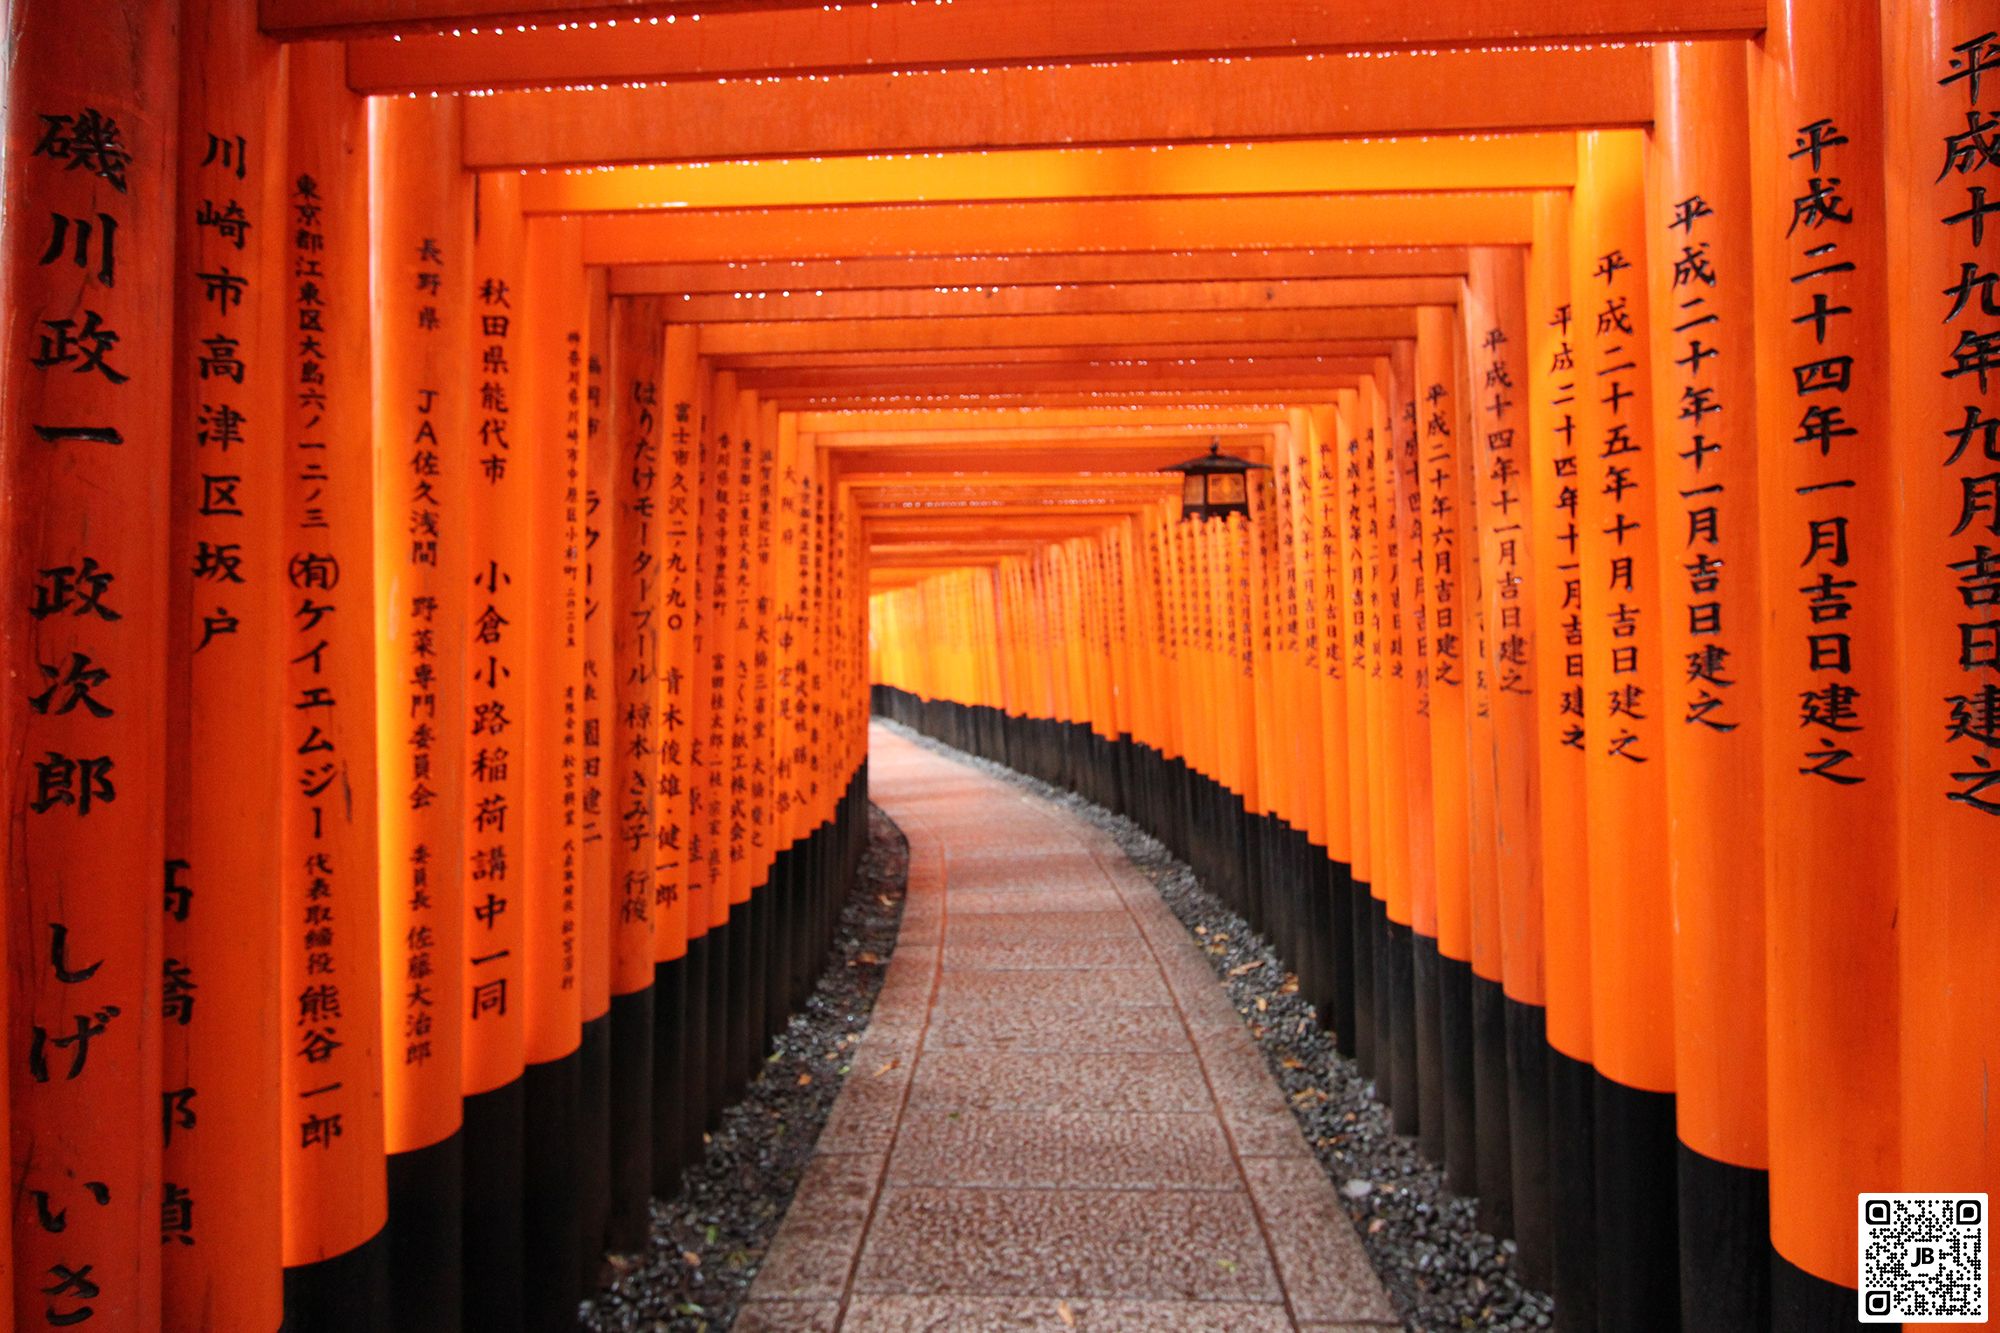 japon kyoto sanctuaire fushimi inari-taisha fevrier 2014 haute resolution